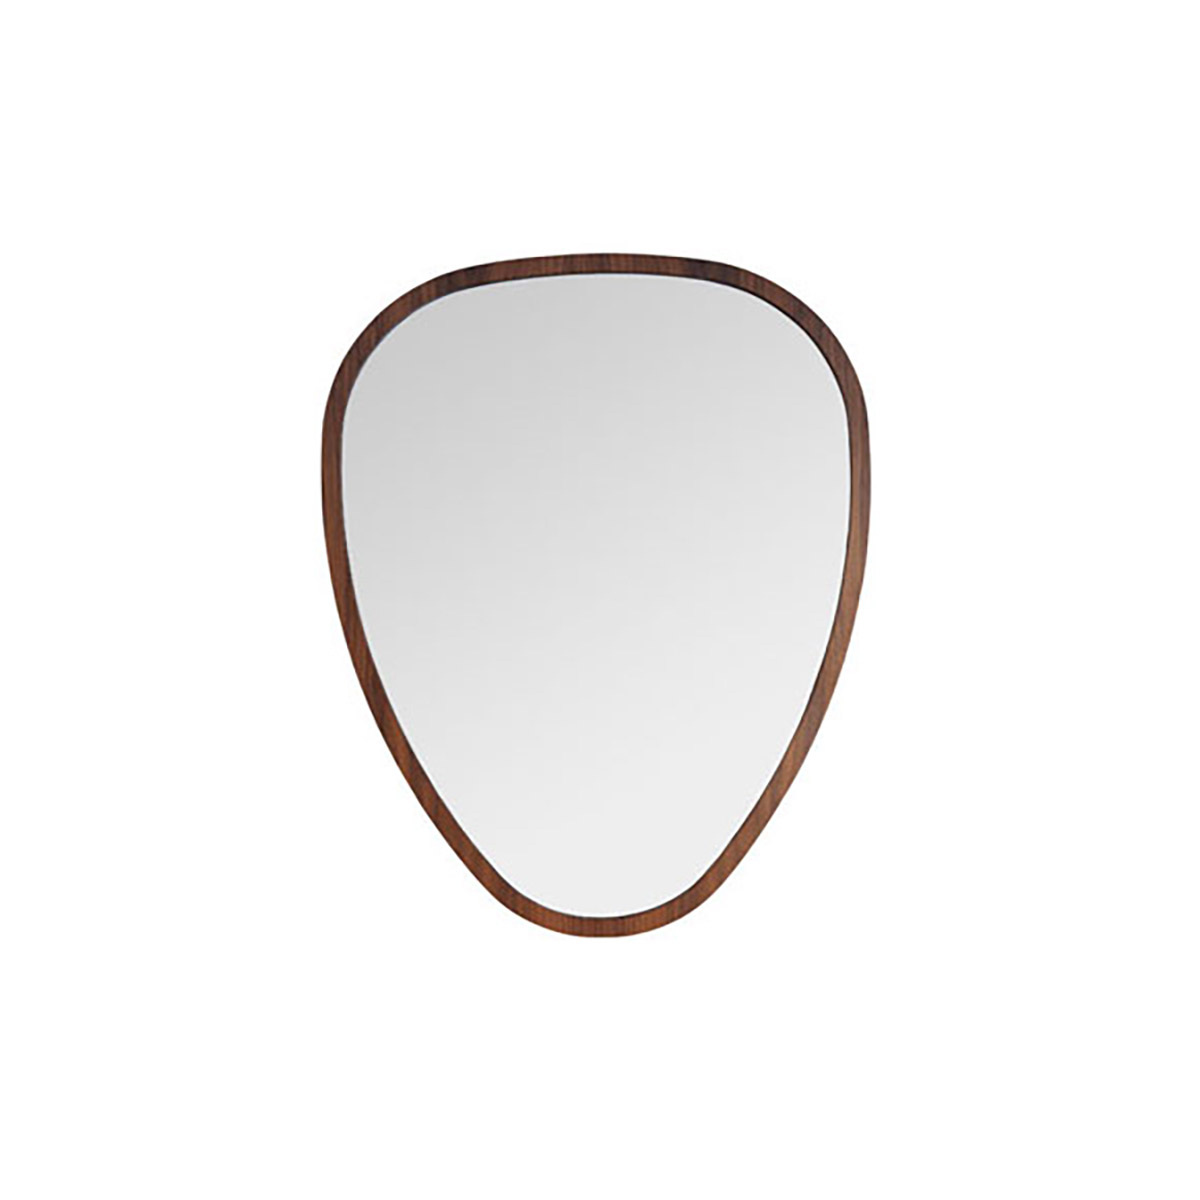 Mirror Ovo, Walnut - H75 cm - Walnut oiled   - image 27